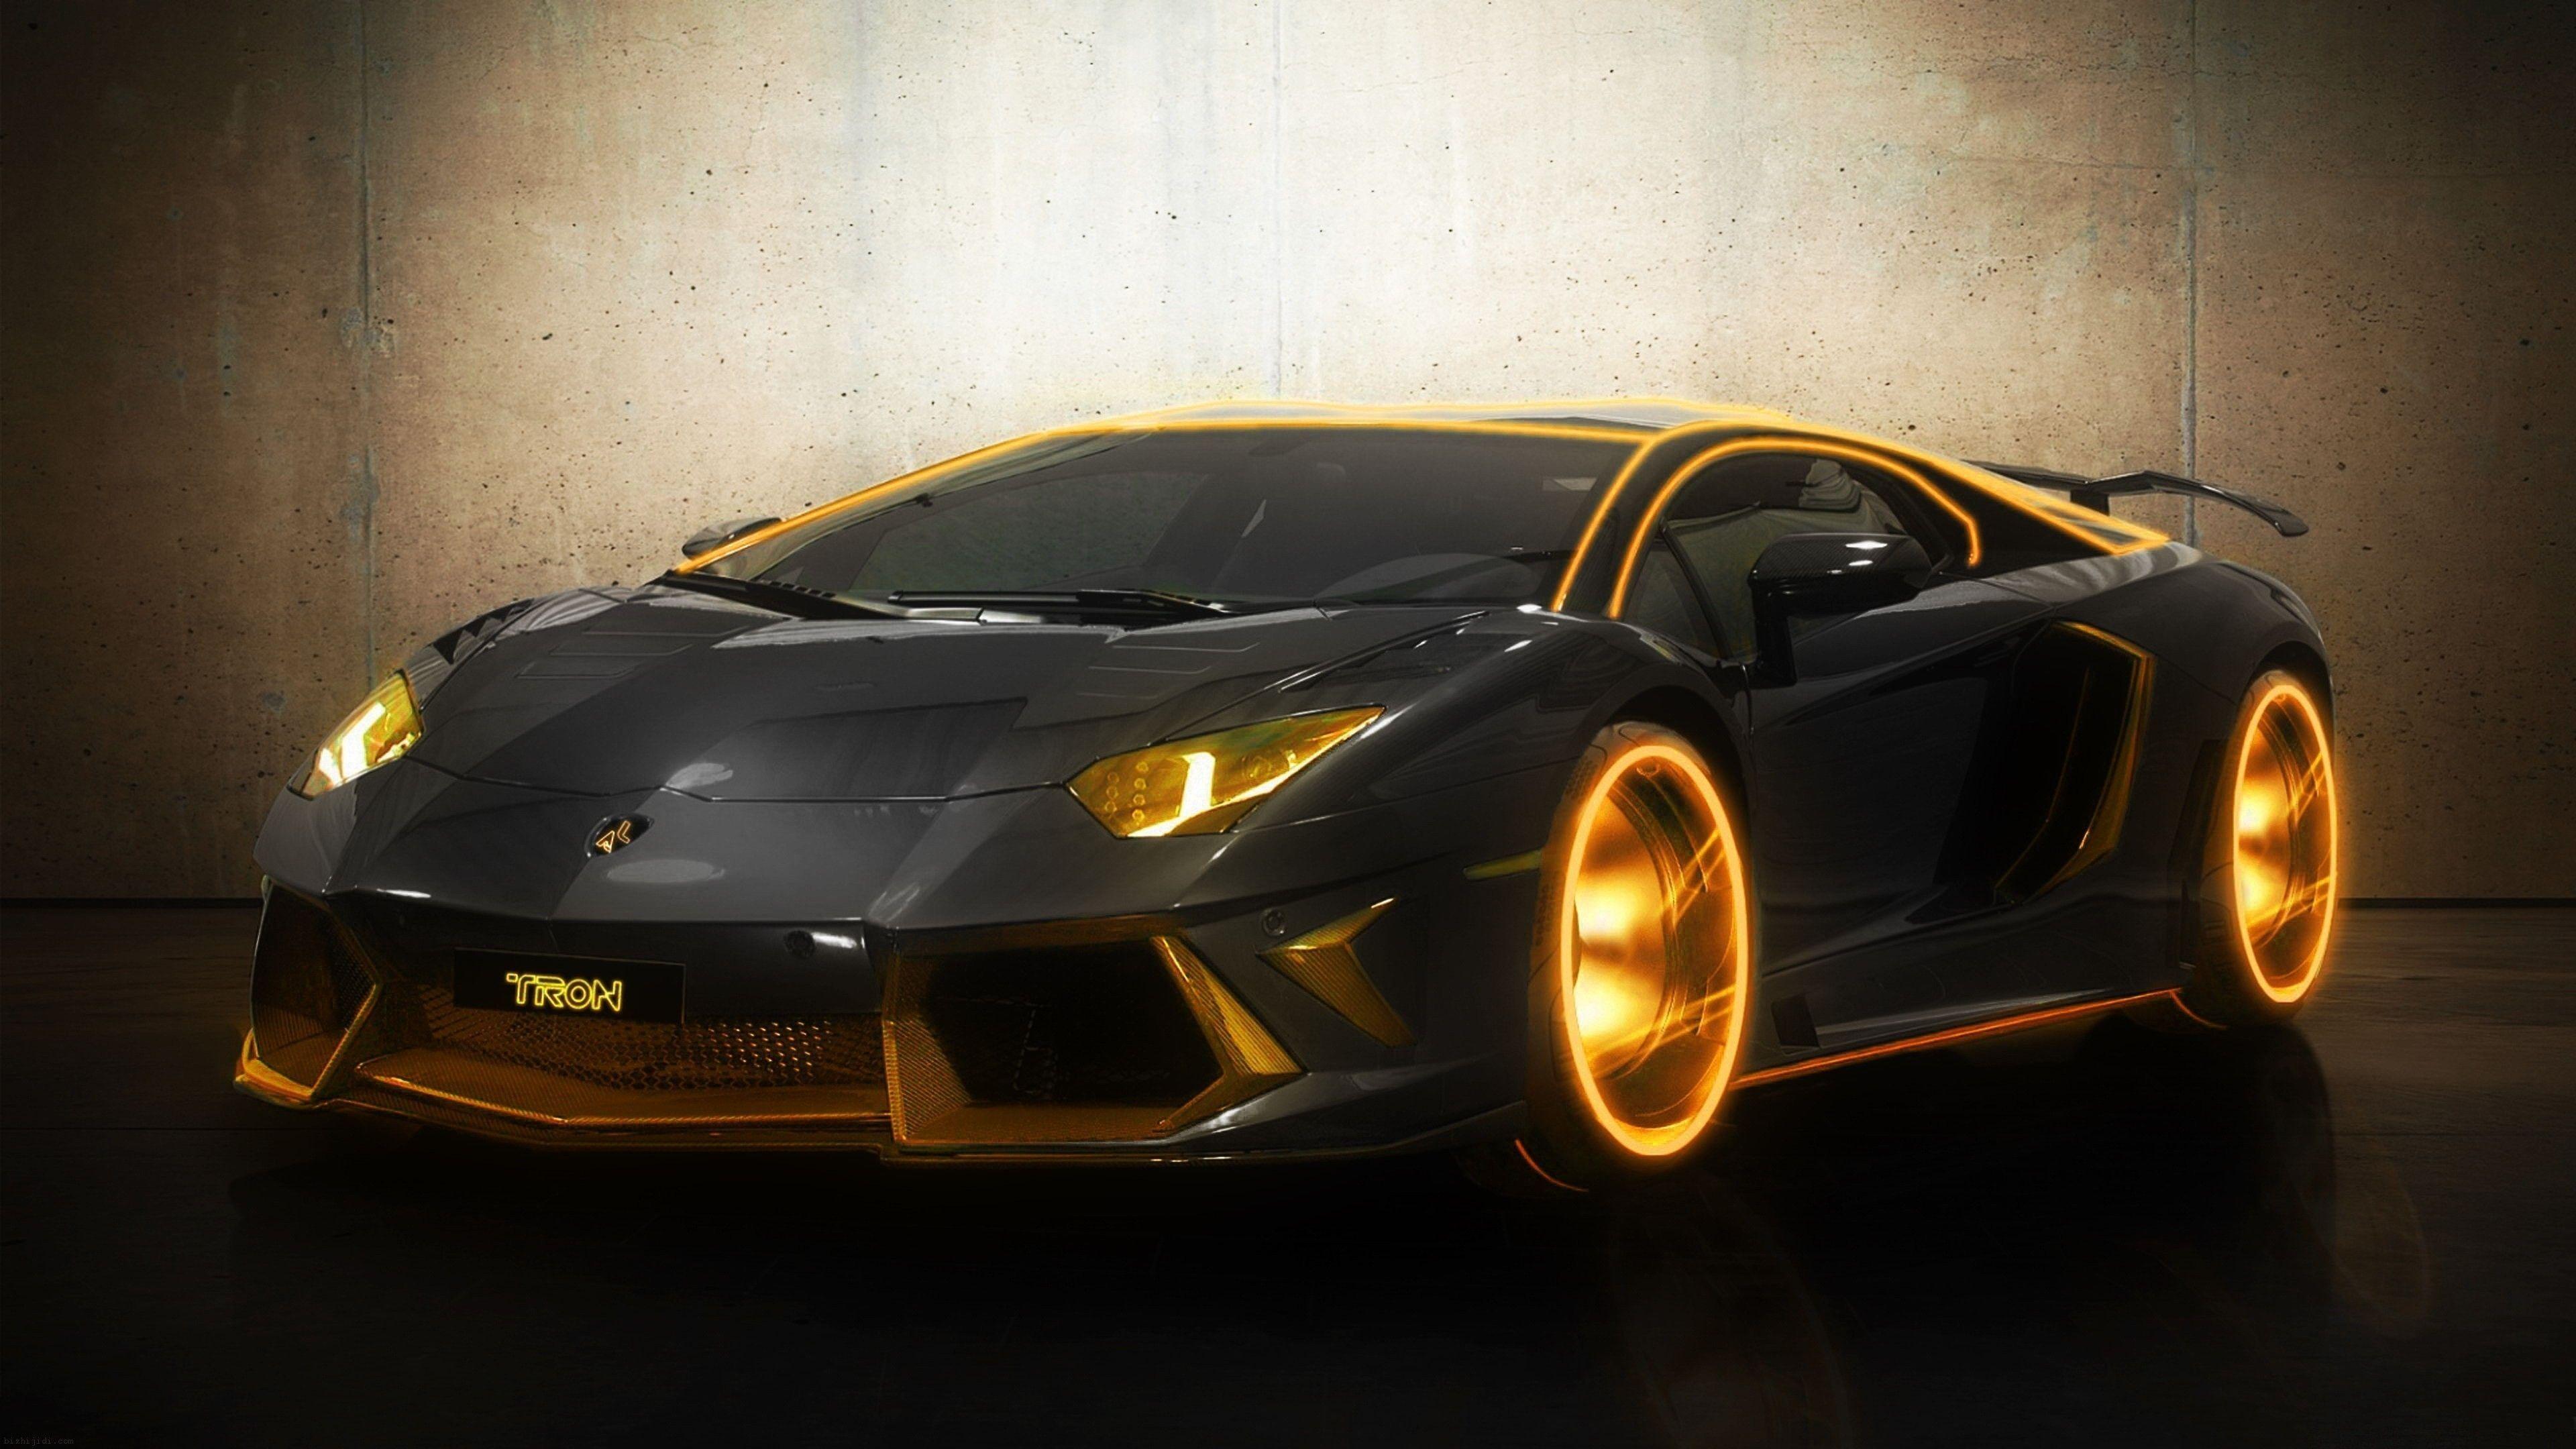 Lamborghini Wallpaper Images  Free Download on Freepik